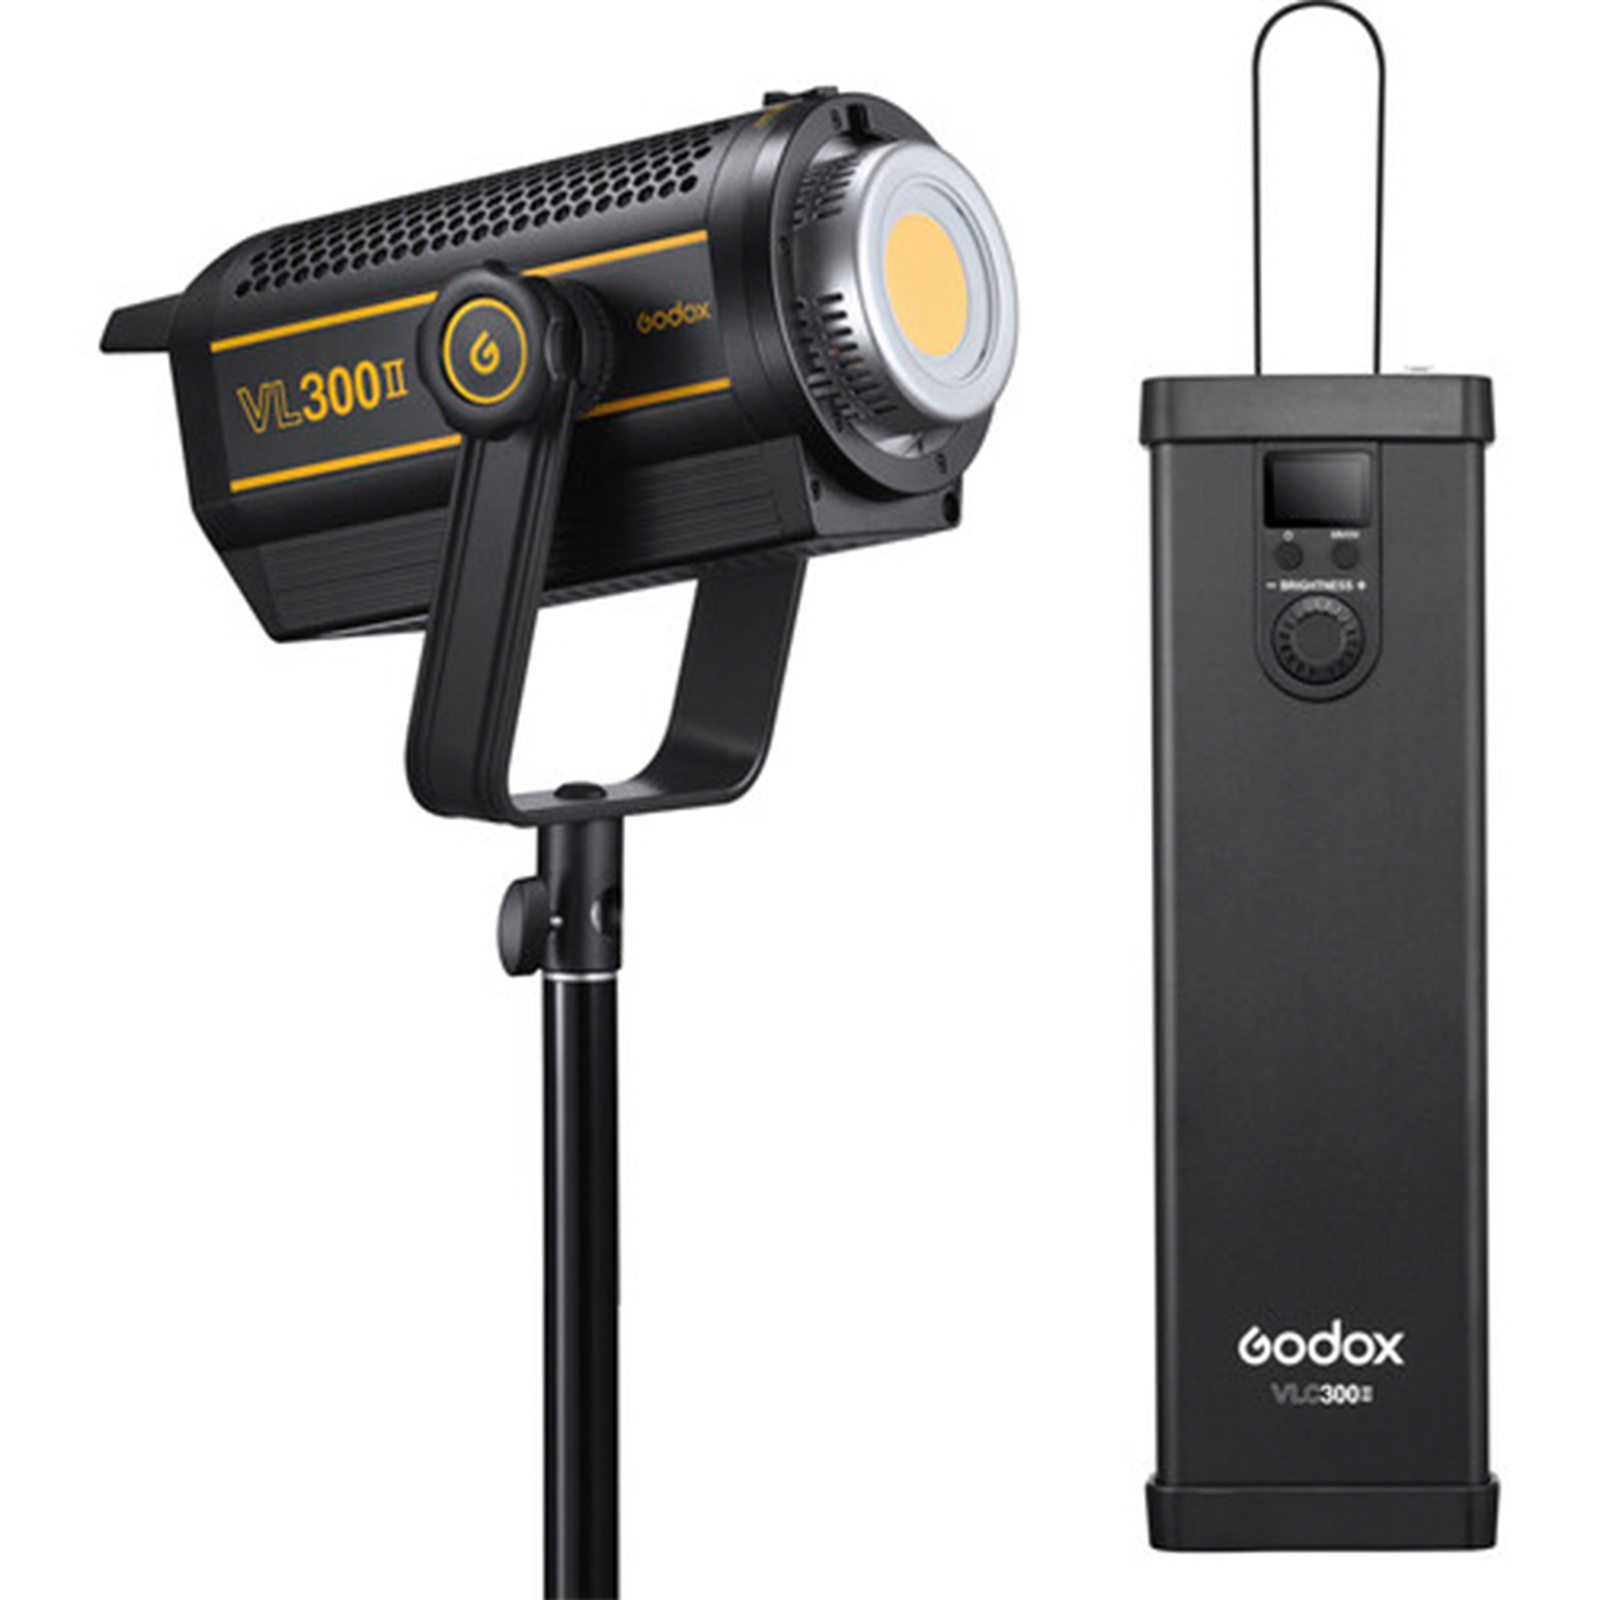 Image of Godox Vl300II LED Video Light